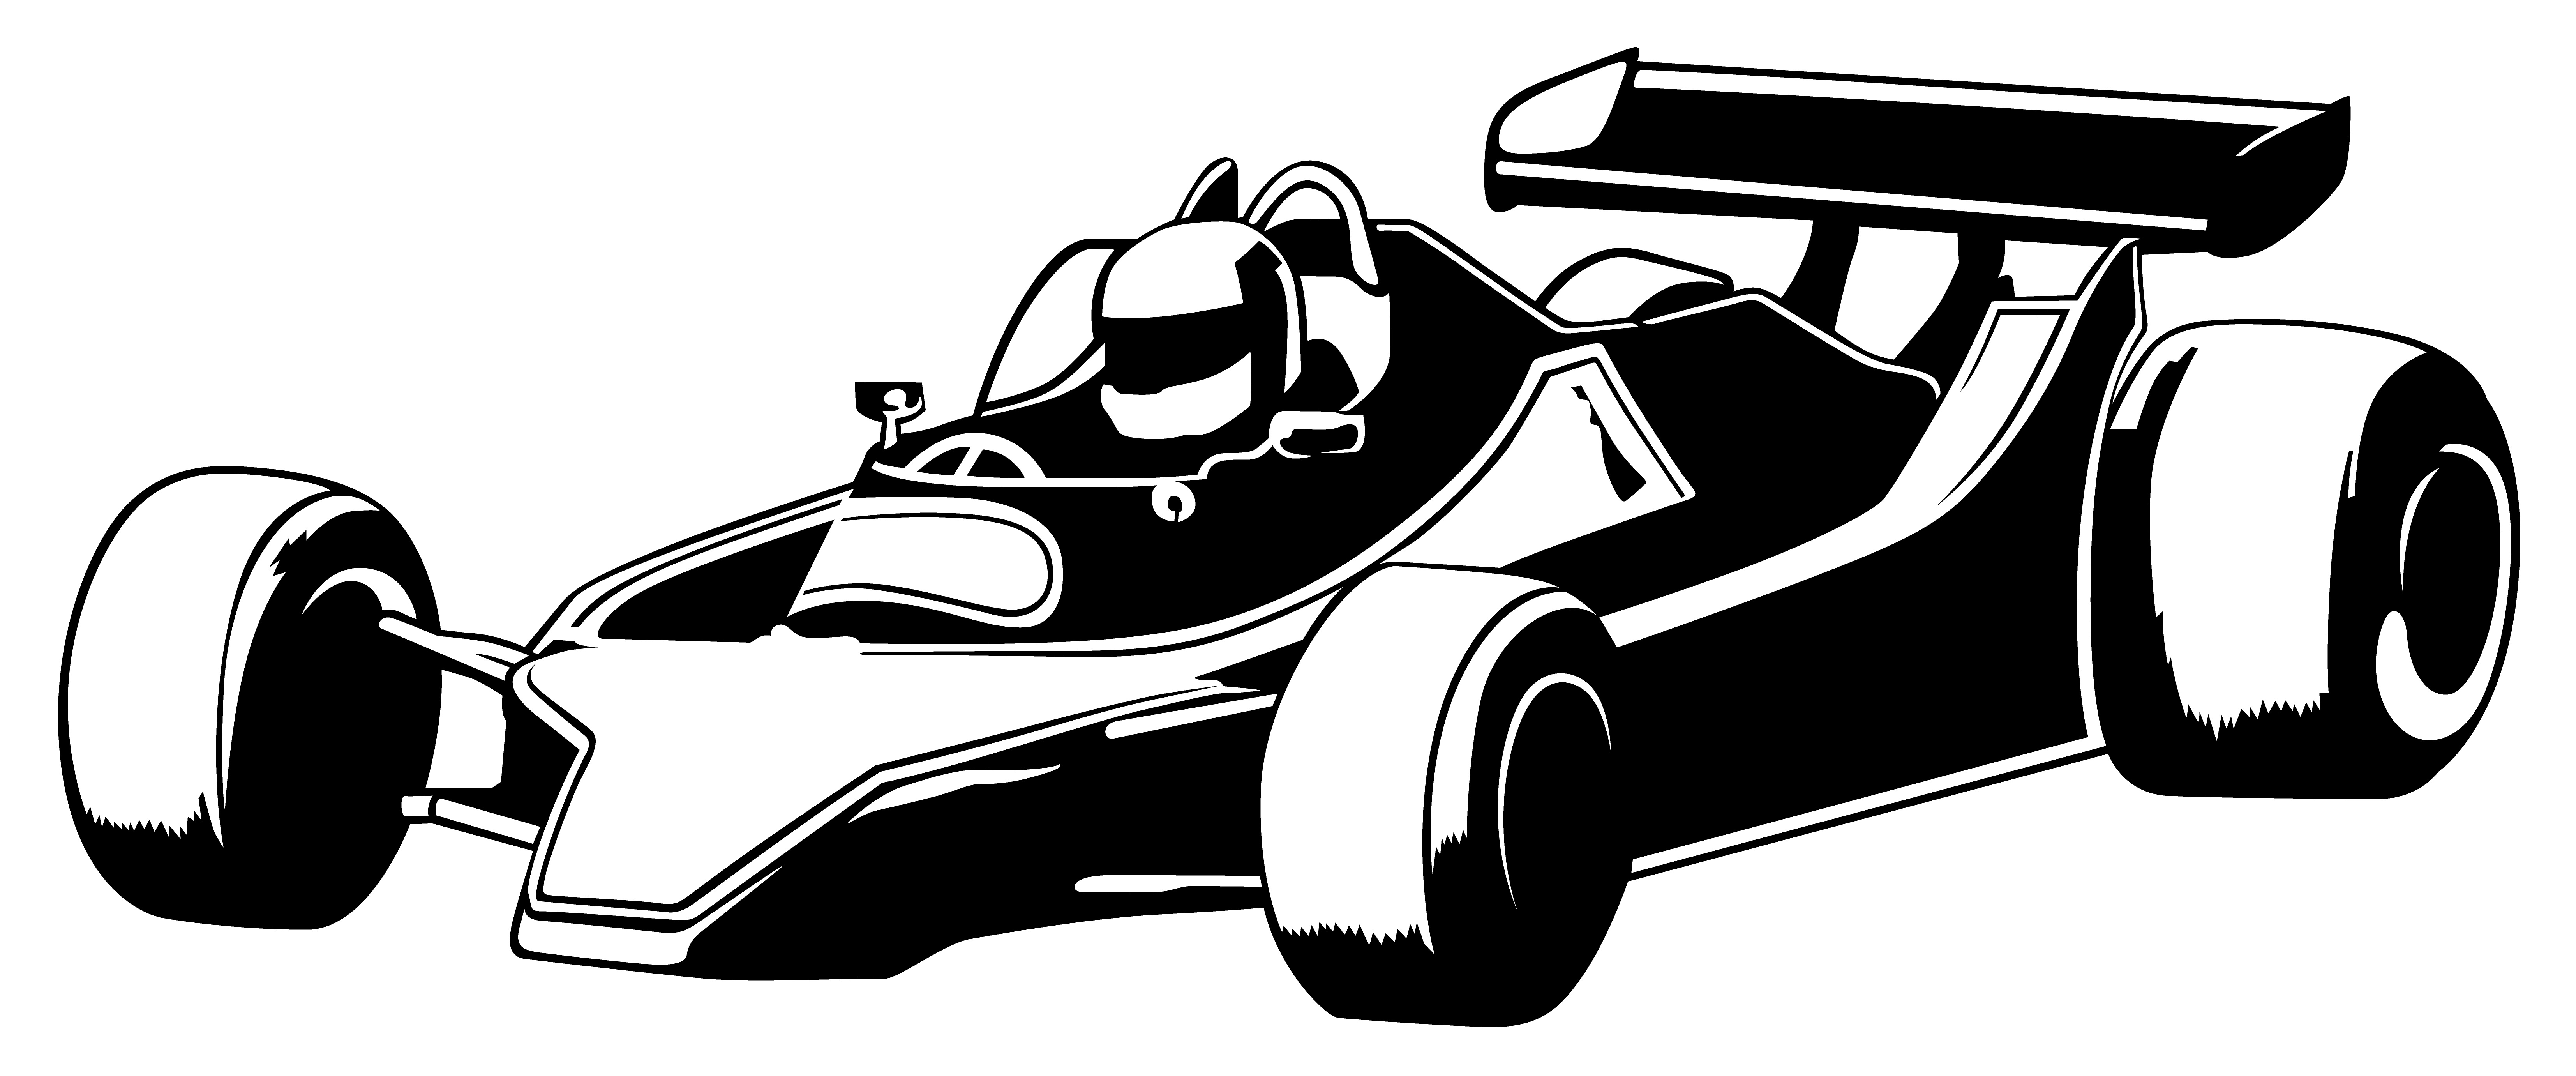 Download Black and White Racing Car - Download Free Vectors ...